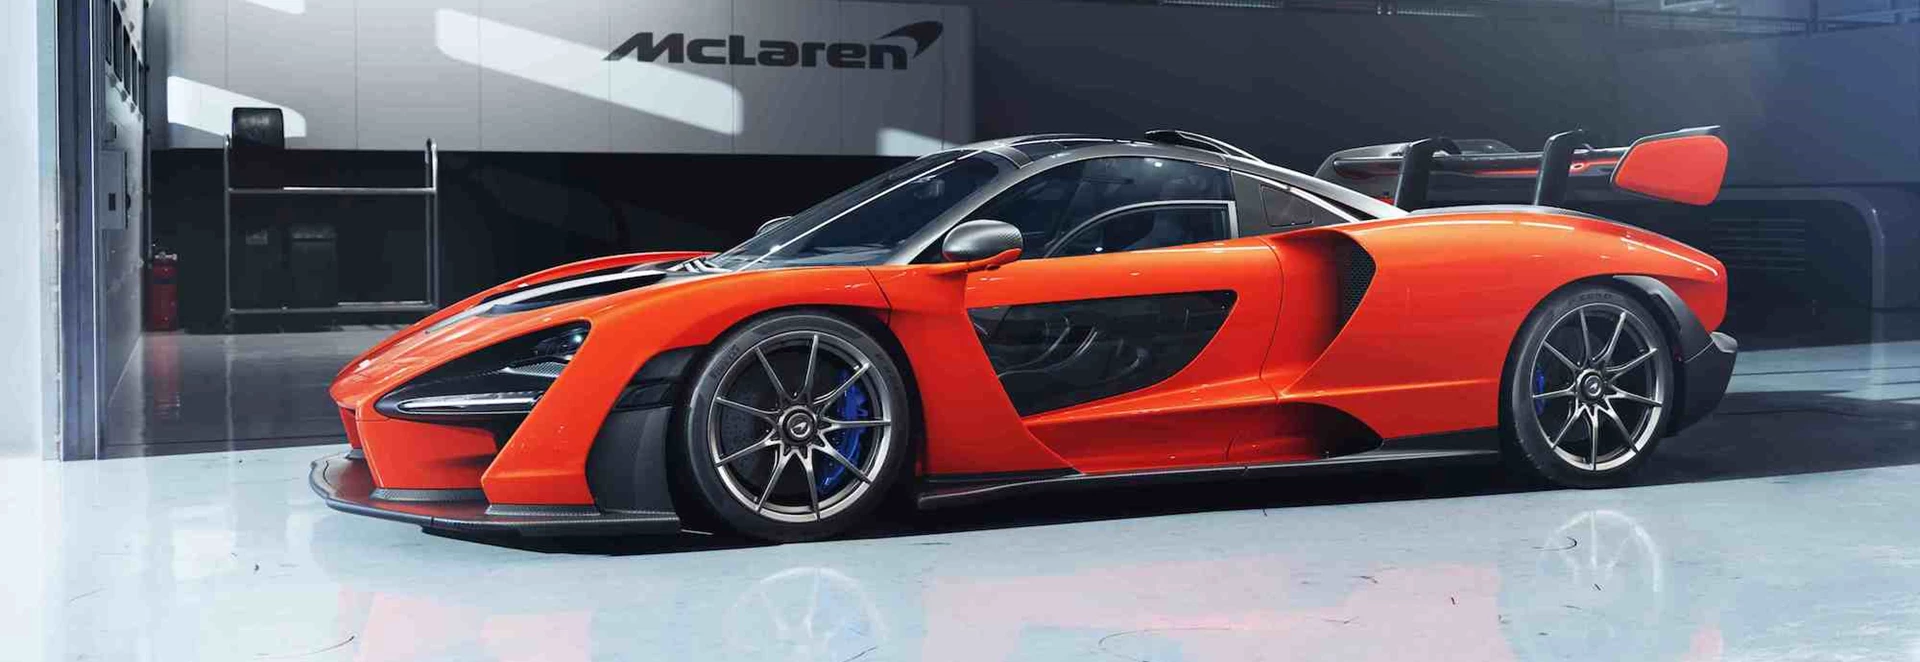 McLaren unveils the Senna supercar 